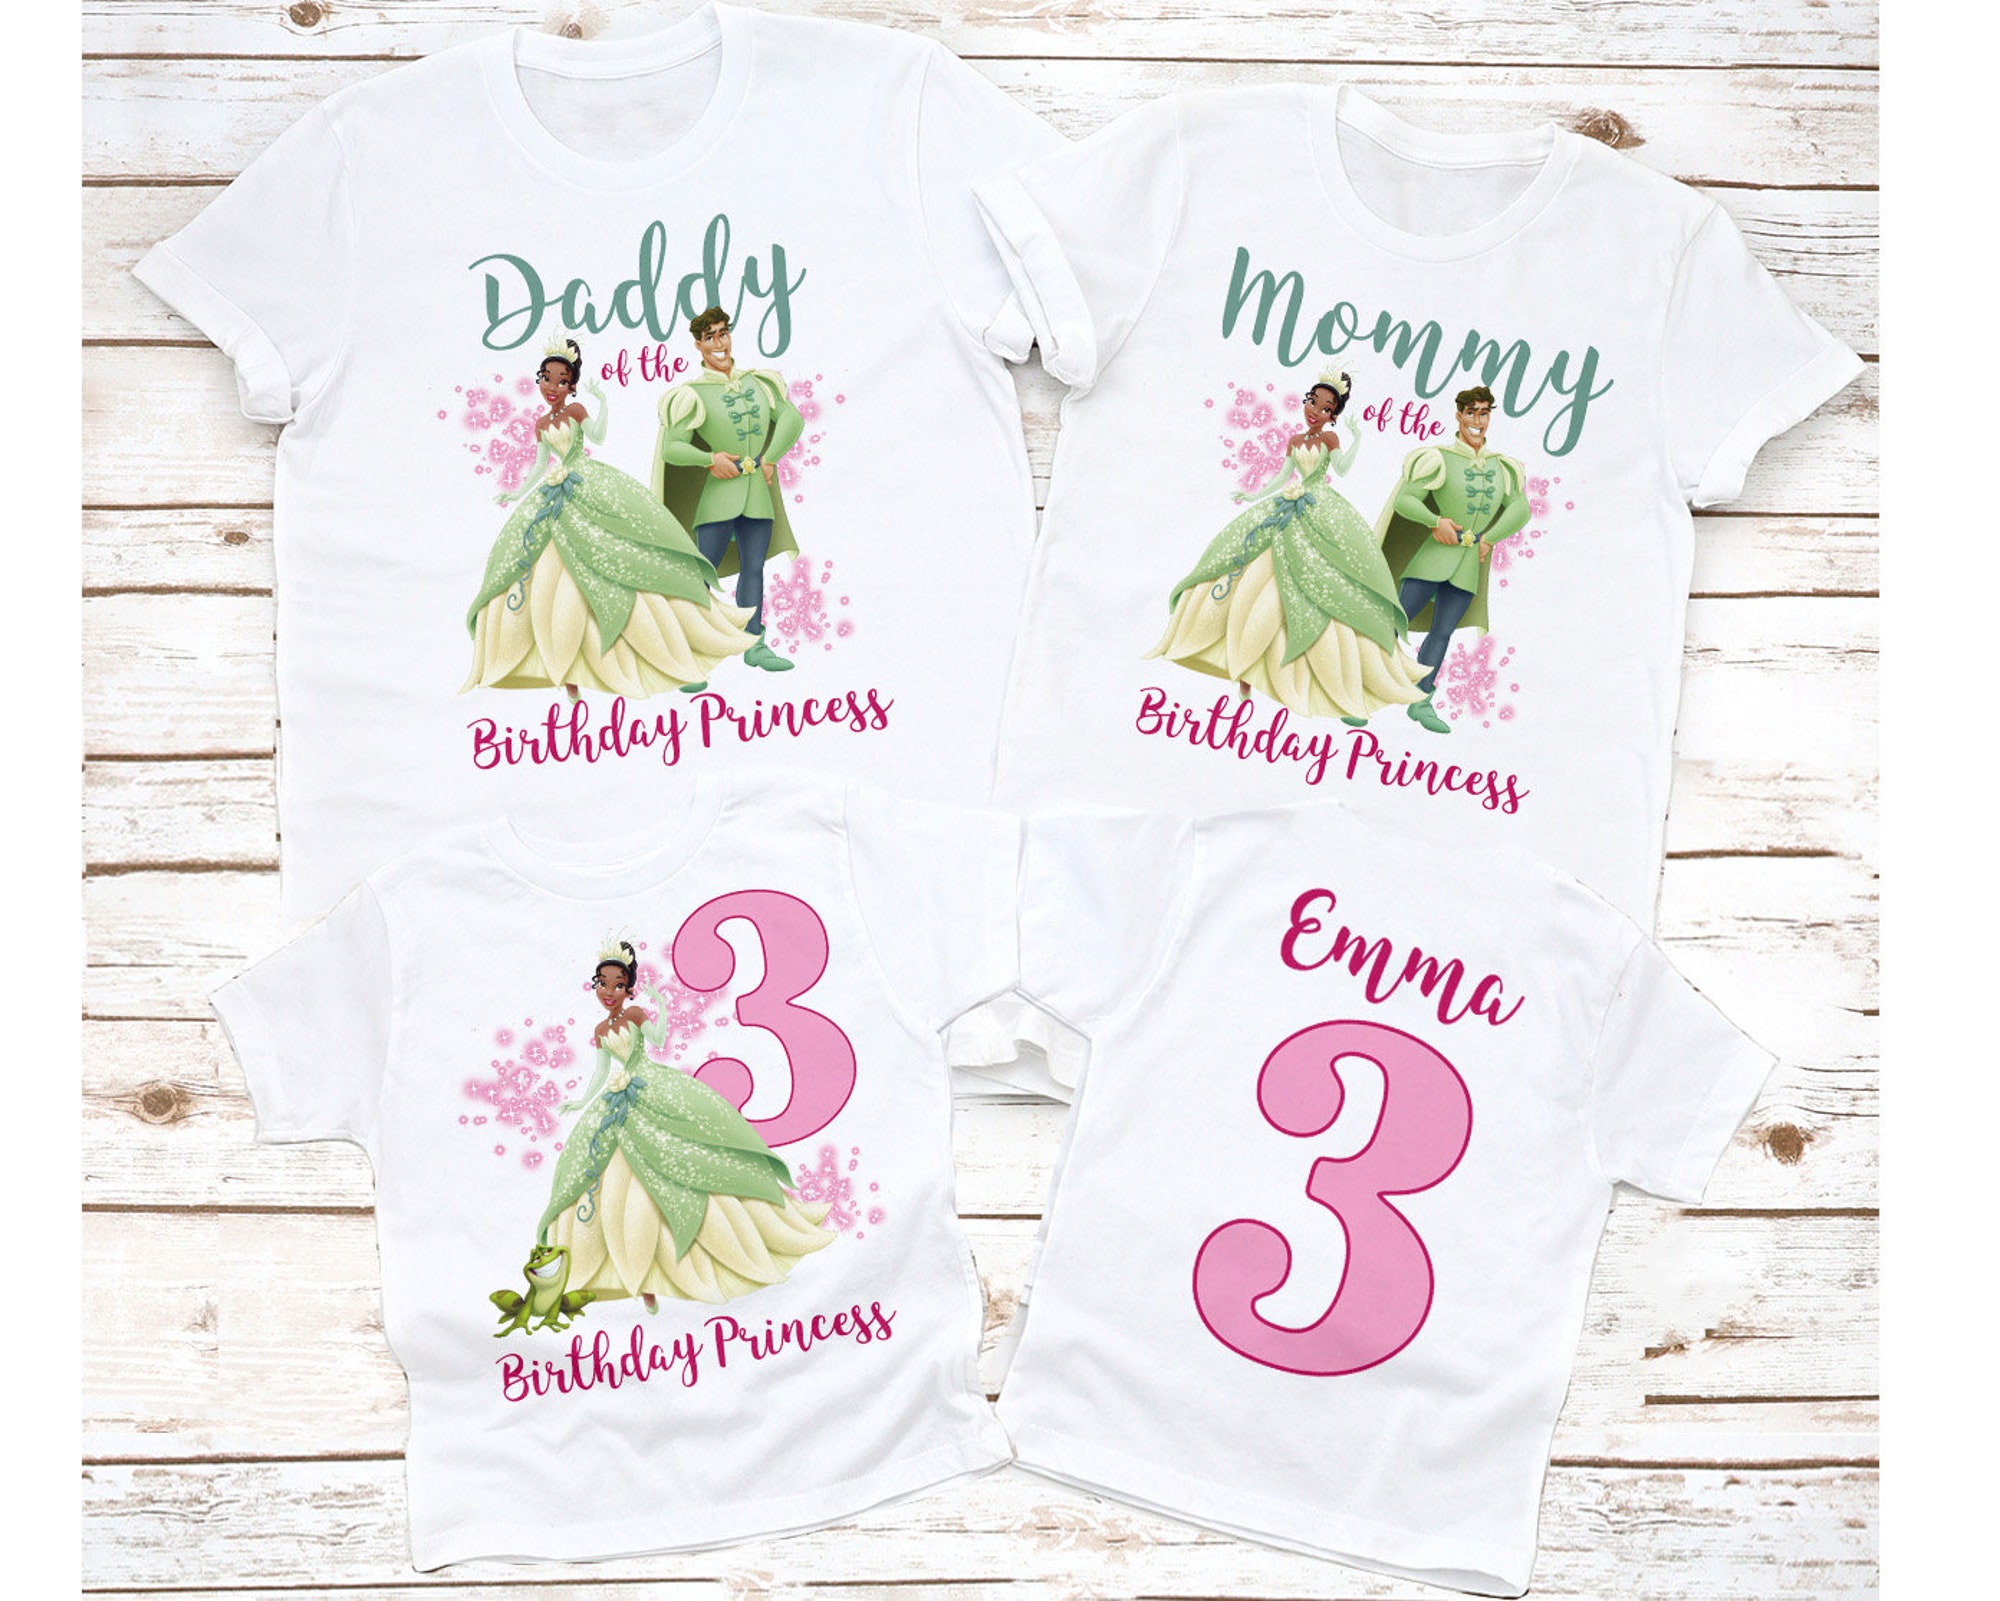 Discover Princess Tiana Shirt, Tiana Mommy shirt, Princess and Frog Birthday shirt, Tiana Matching Family Birthday shirts, Disney Girl Birthday shirt